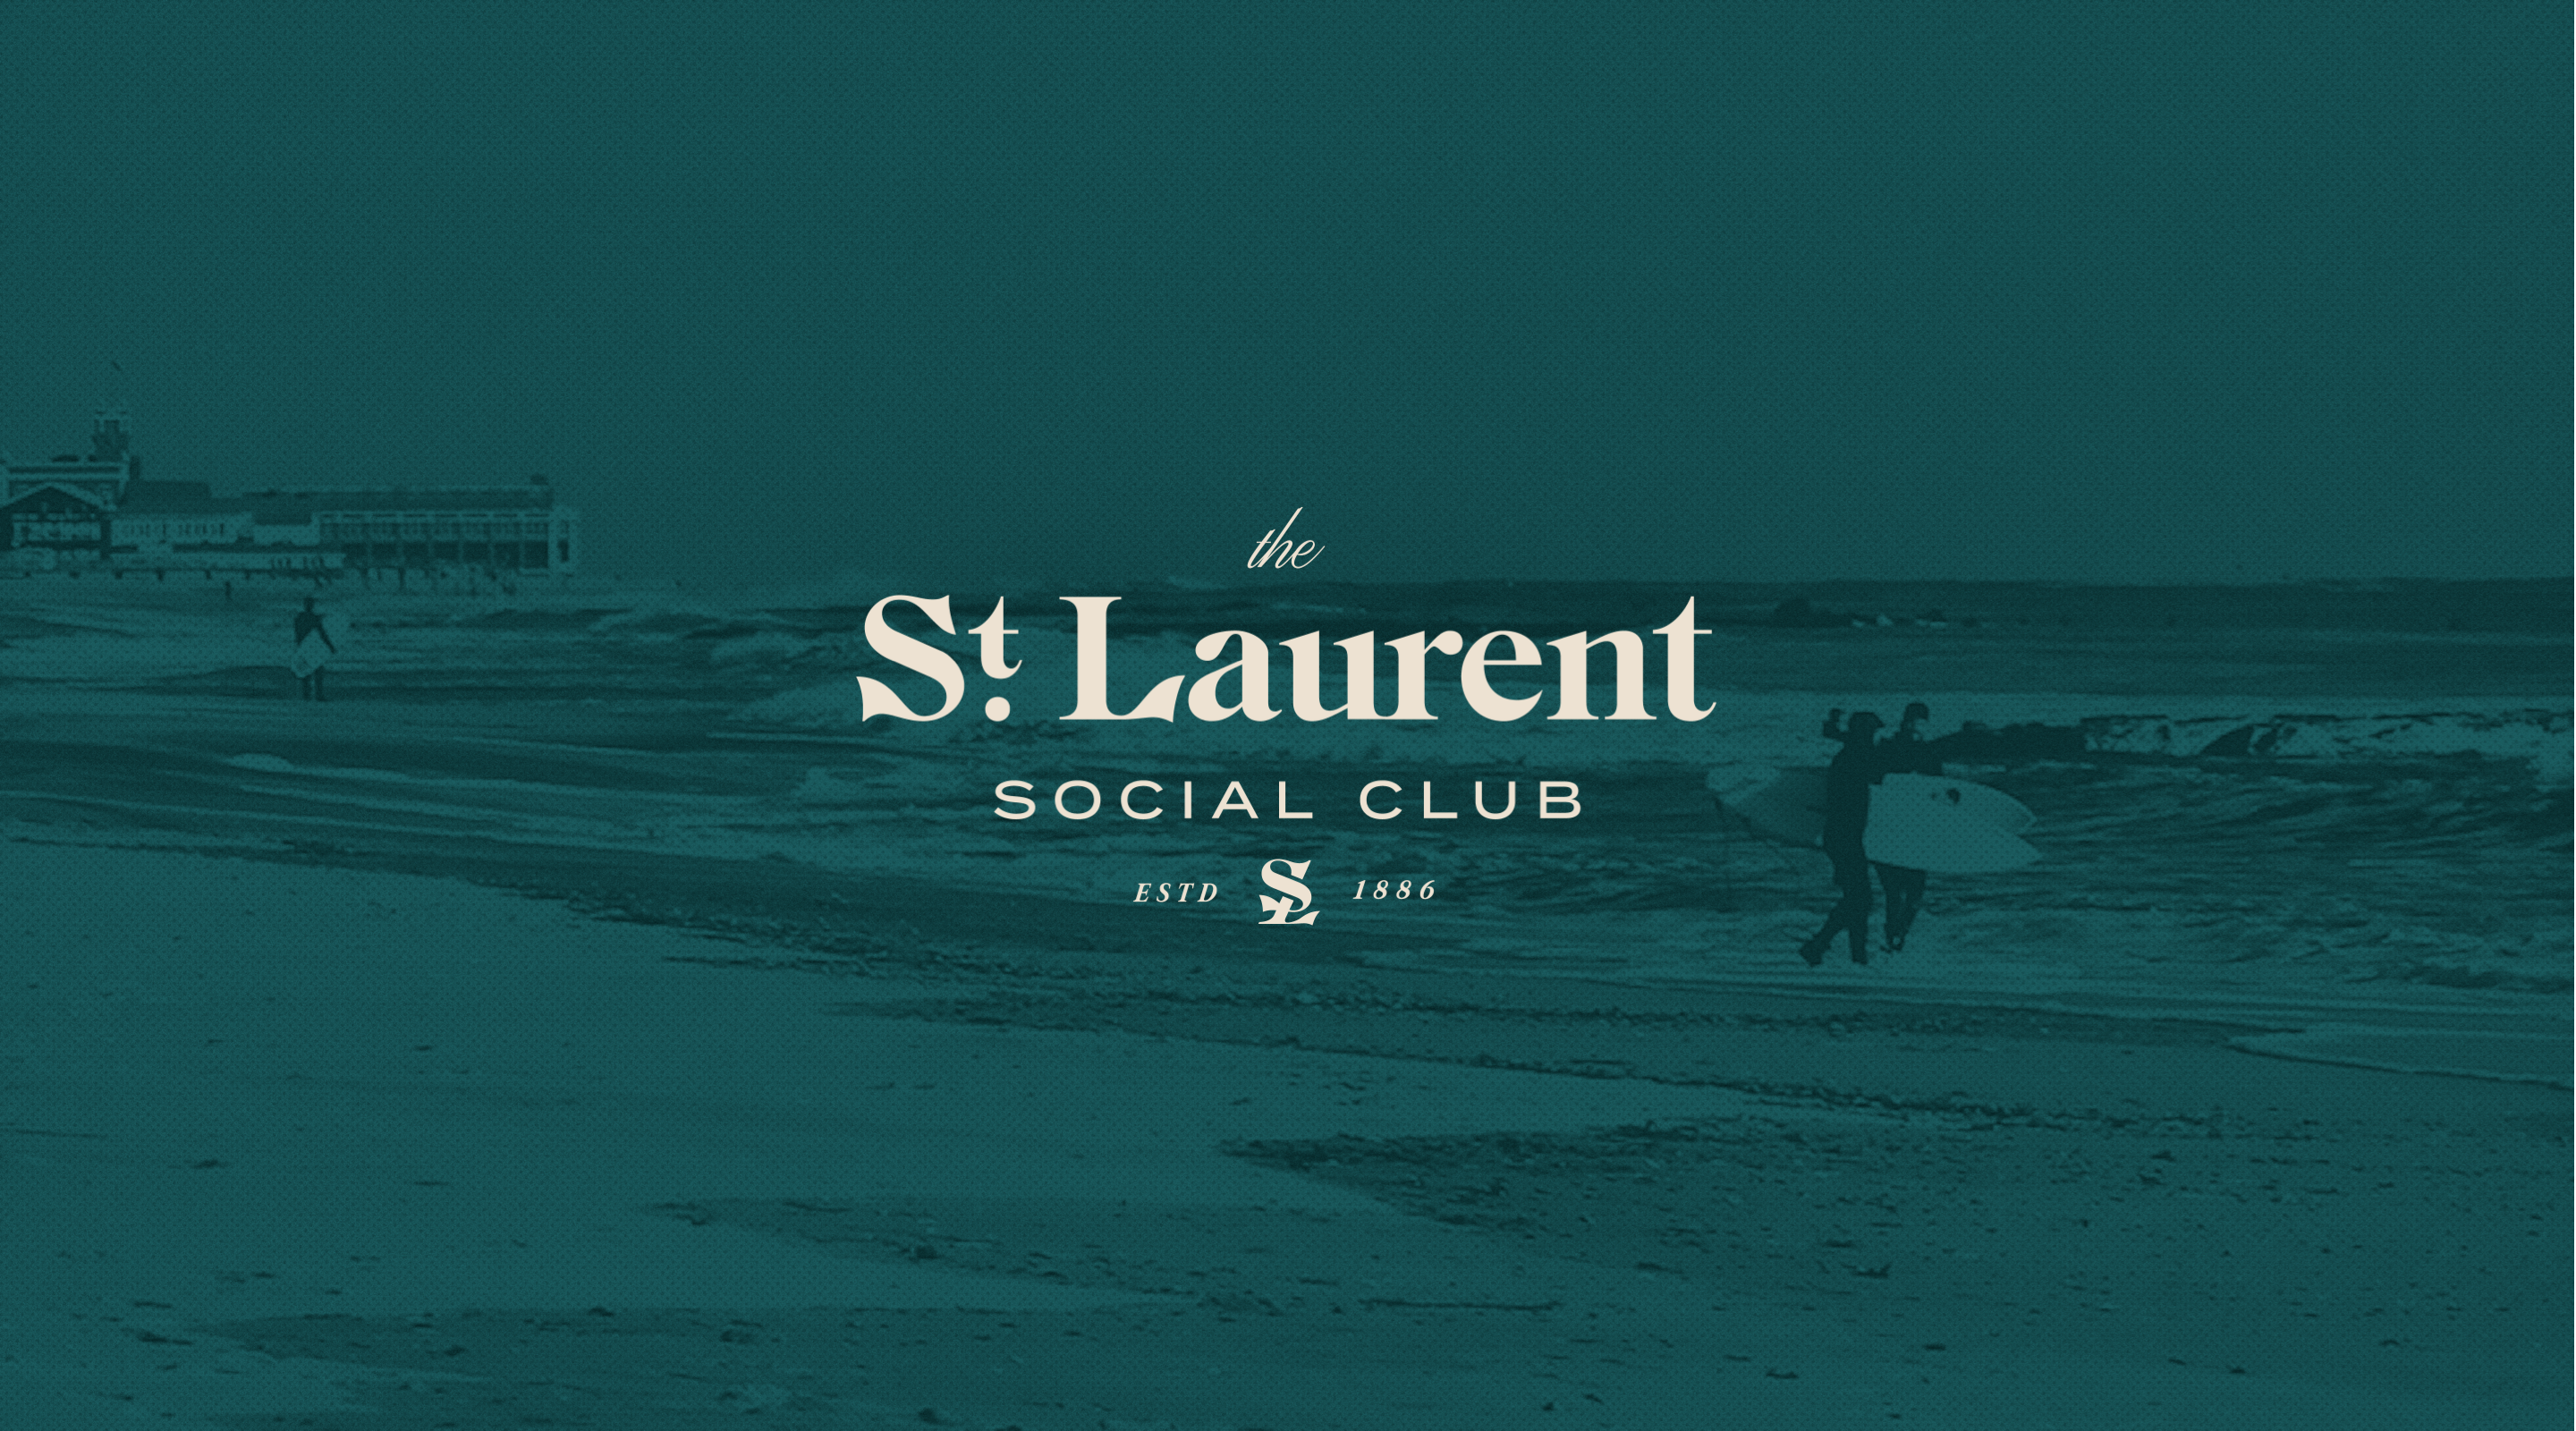 The St. Laurent Social Club